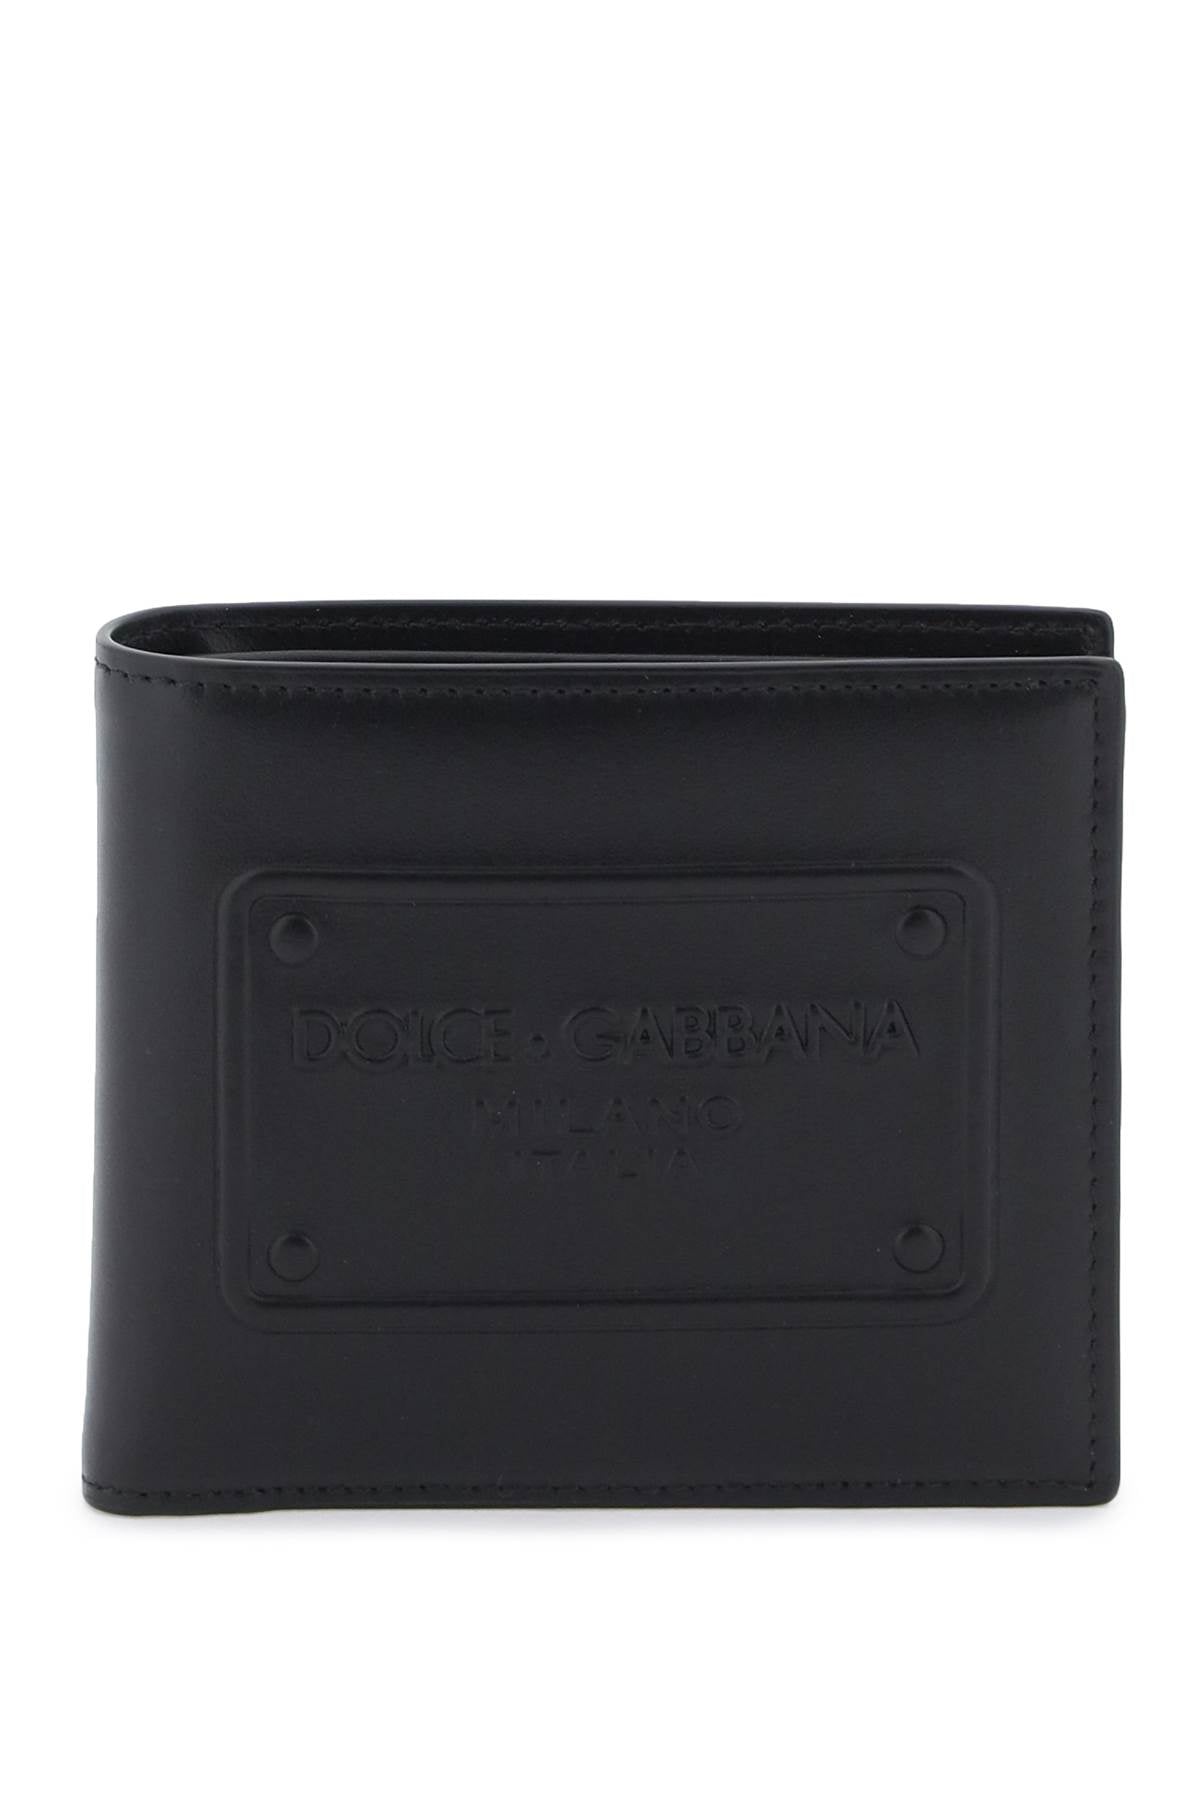 Dolce & gabbana leather bi-fold wallet-0